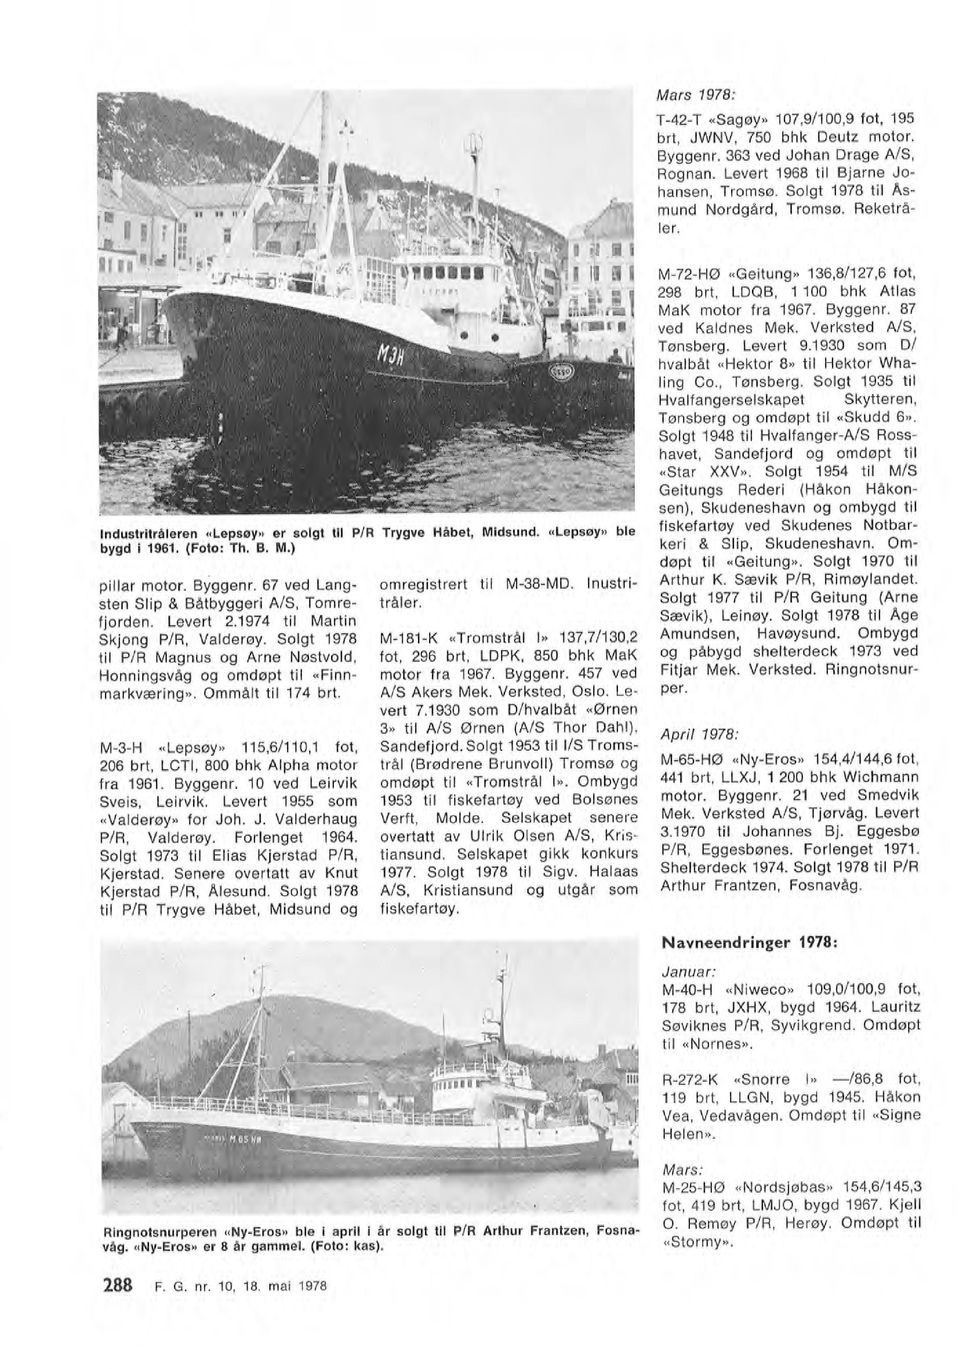 Apri 1978: Honningsvåg og omdøpt ti «Finnmarkværing». Ommåt ti 174 brt. Sveis, Leirvik. Levert 1955 som «Vaderøy» for Joh. J. Vaderhaug P/R, Vaderøy. Forenget 1964.